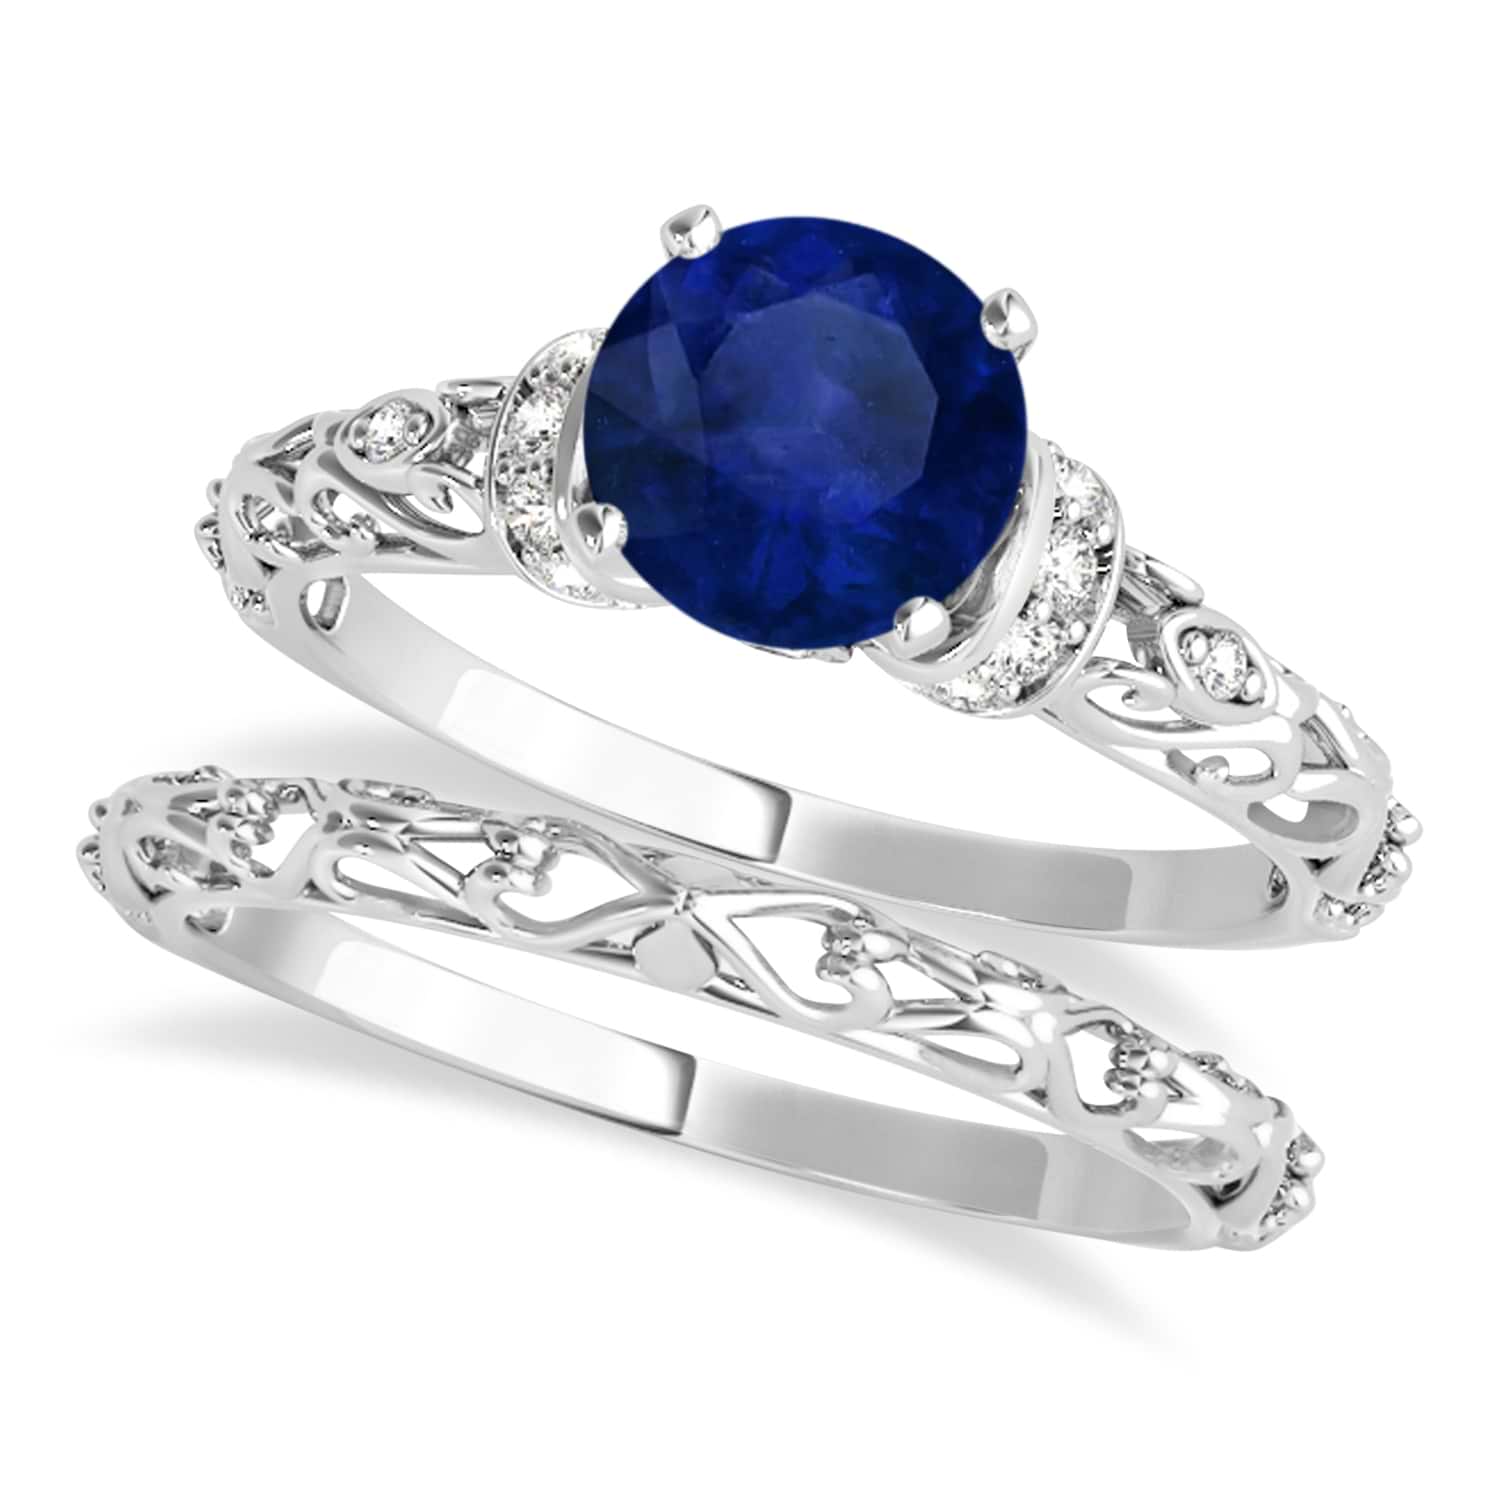 Blue Sapphire & Diamond Antique Style Bridal Set 18k White Gold (1.62ct)